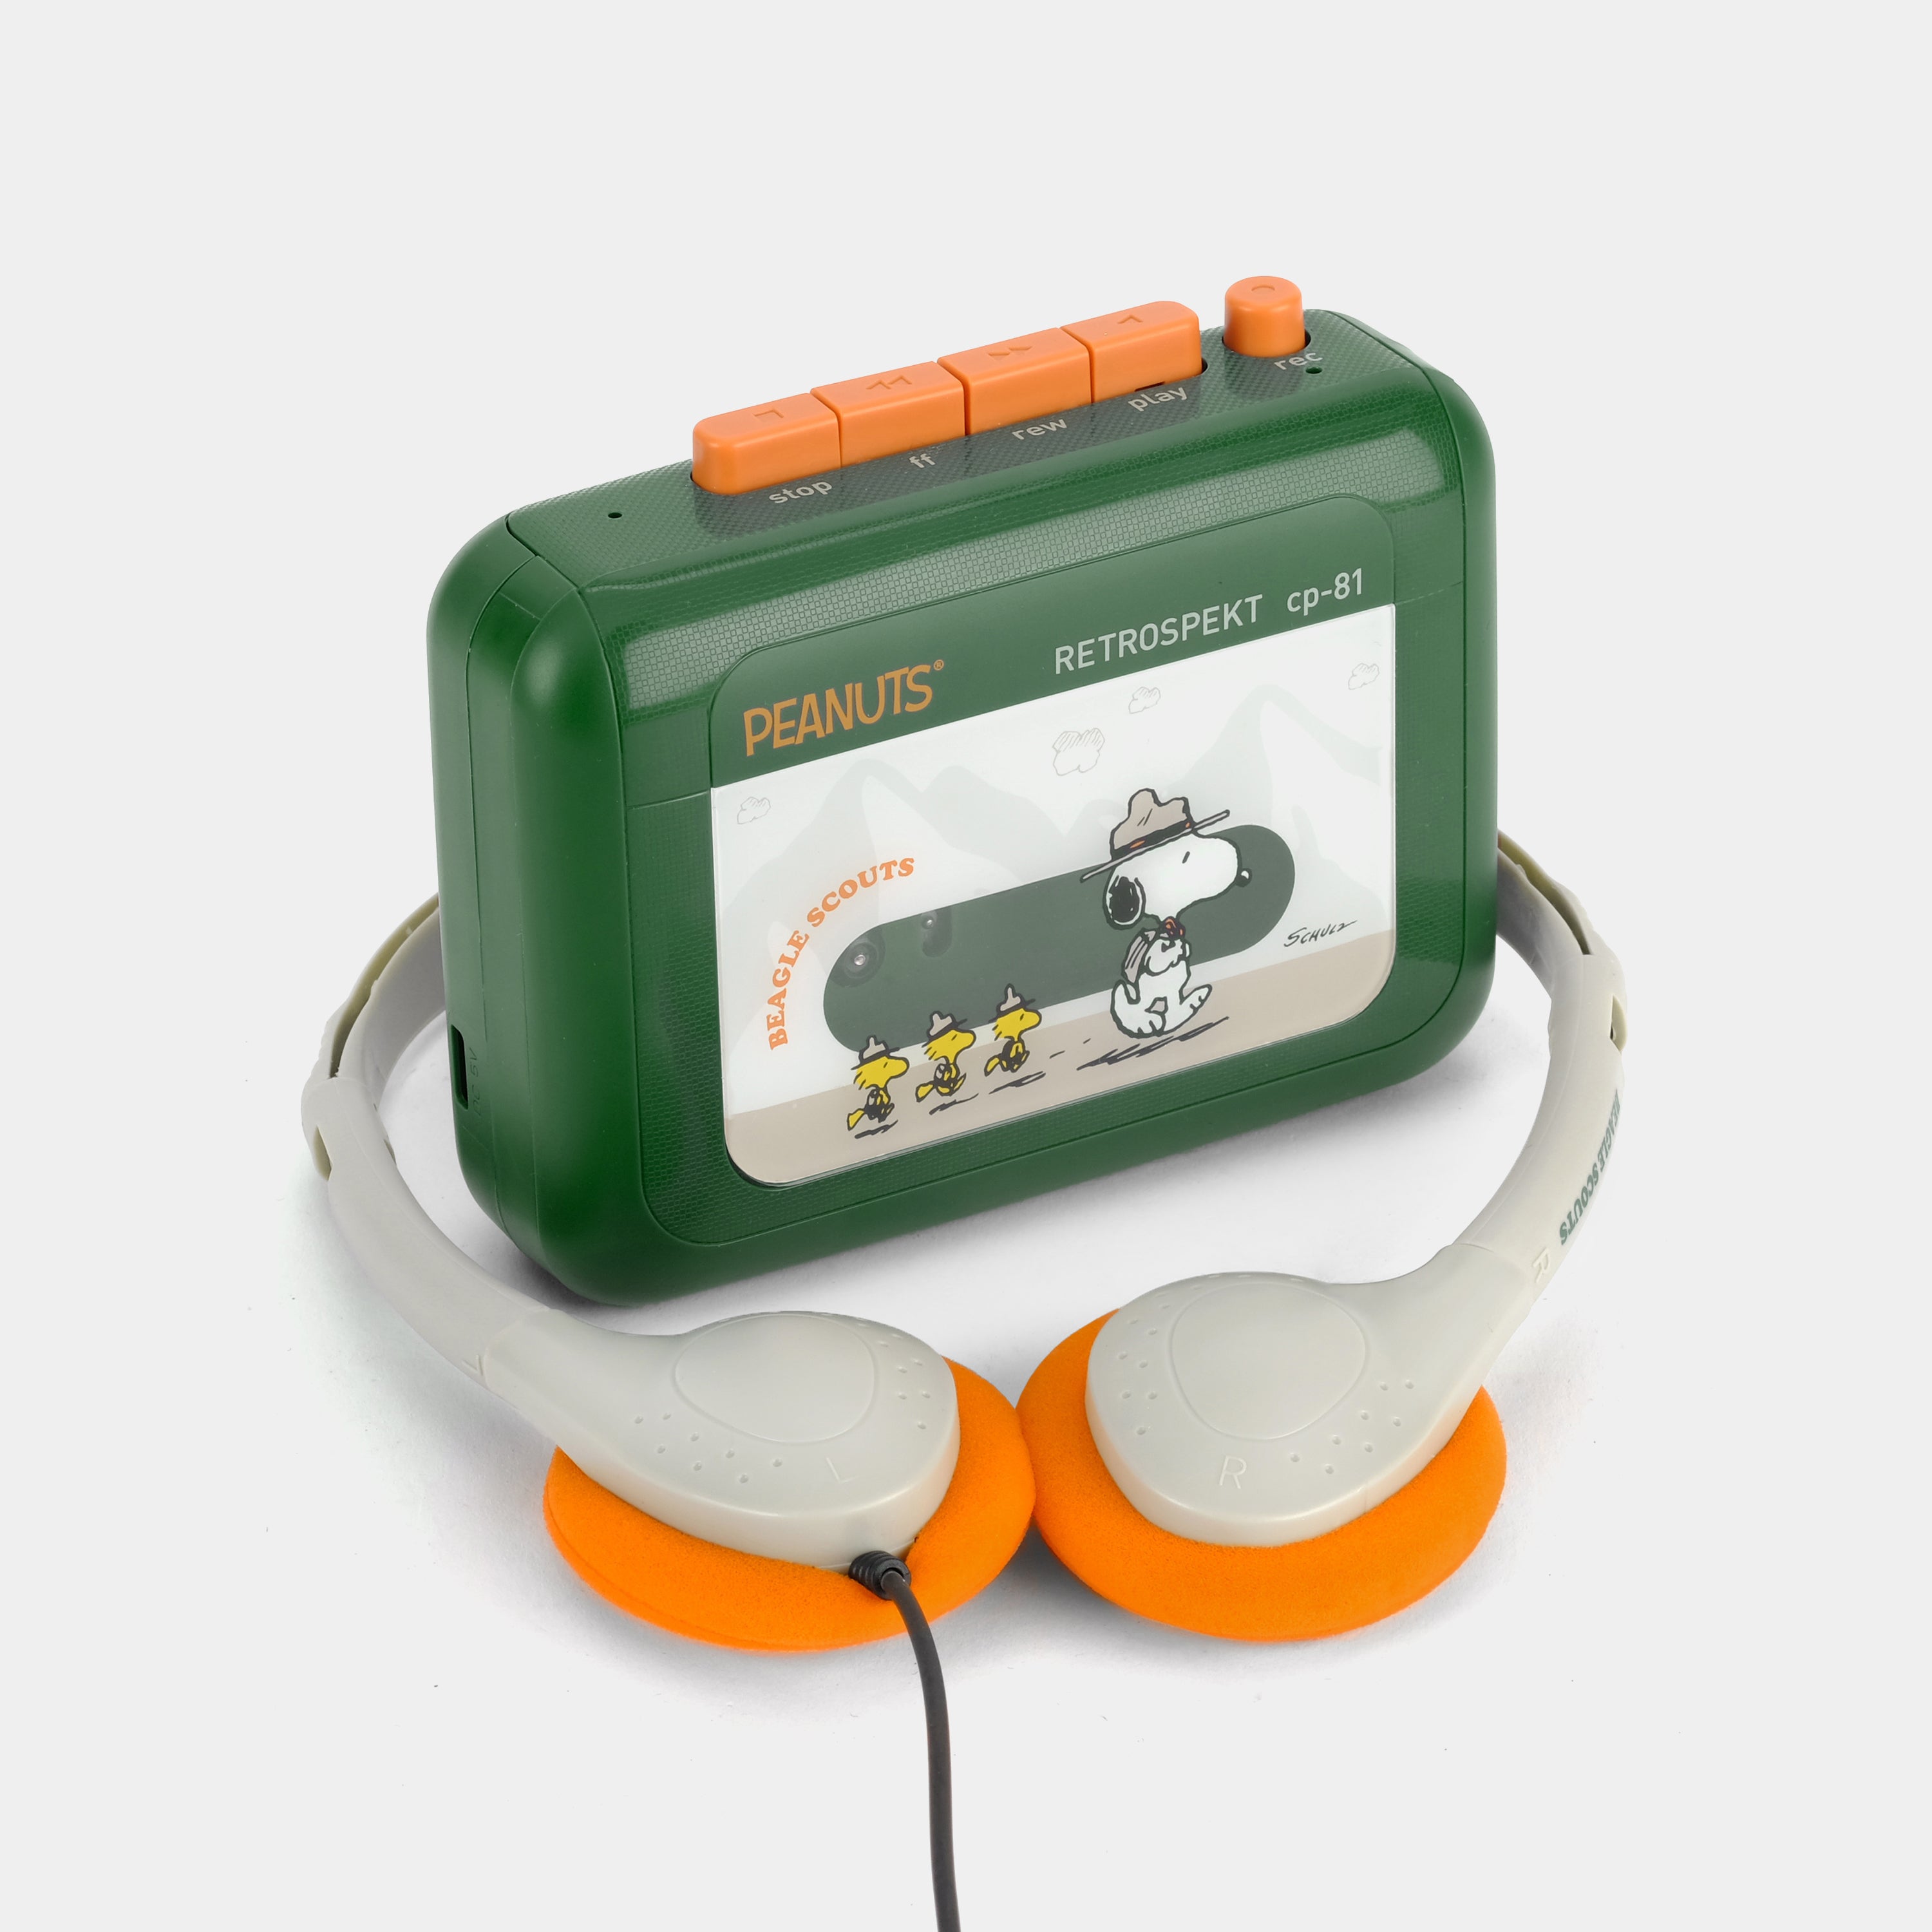 Peanuts Beagle Scouts Retrospekt CP-81 Portable Cassette Player